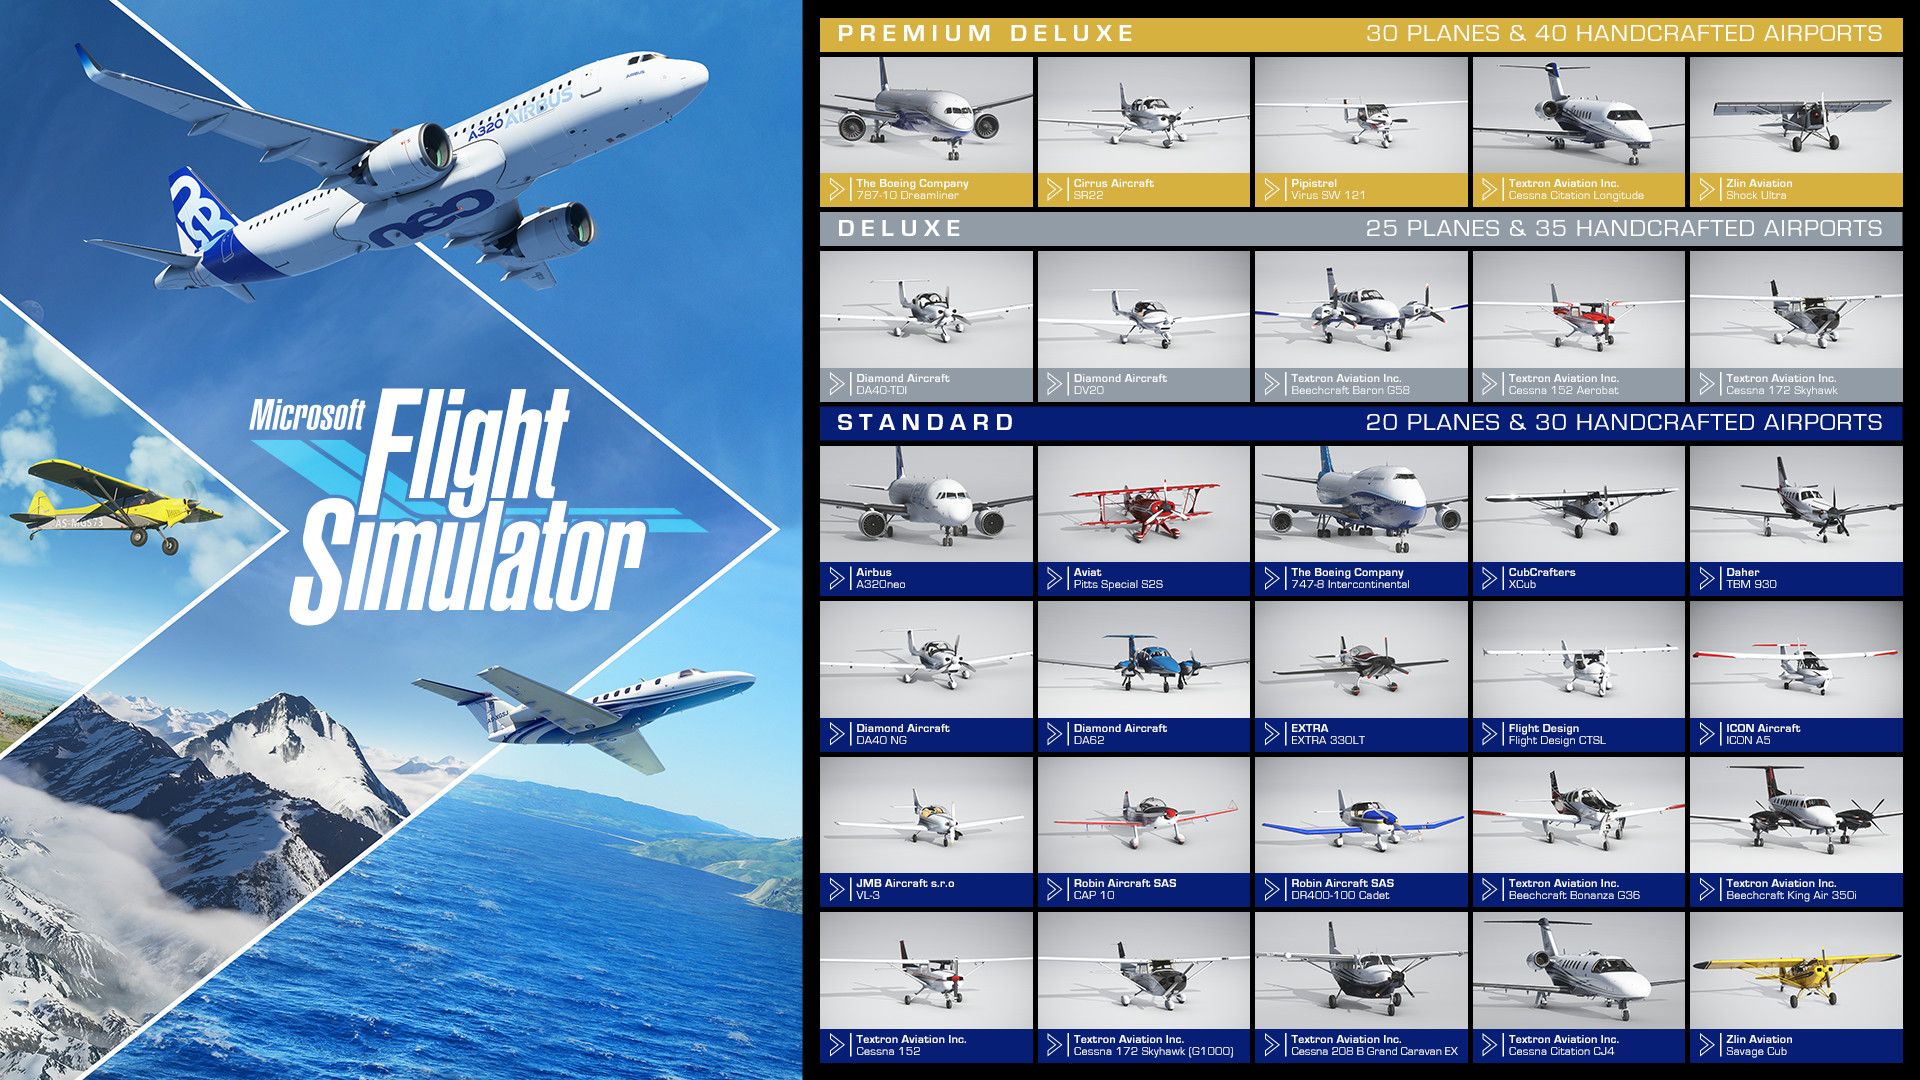 Microsoft Flight Simulator Premium Deluxe Game of the Year Edition EU Xbox Series X|S / Windows 10 CD Key 102.81 $